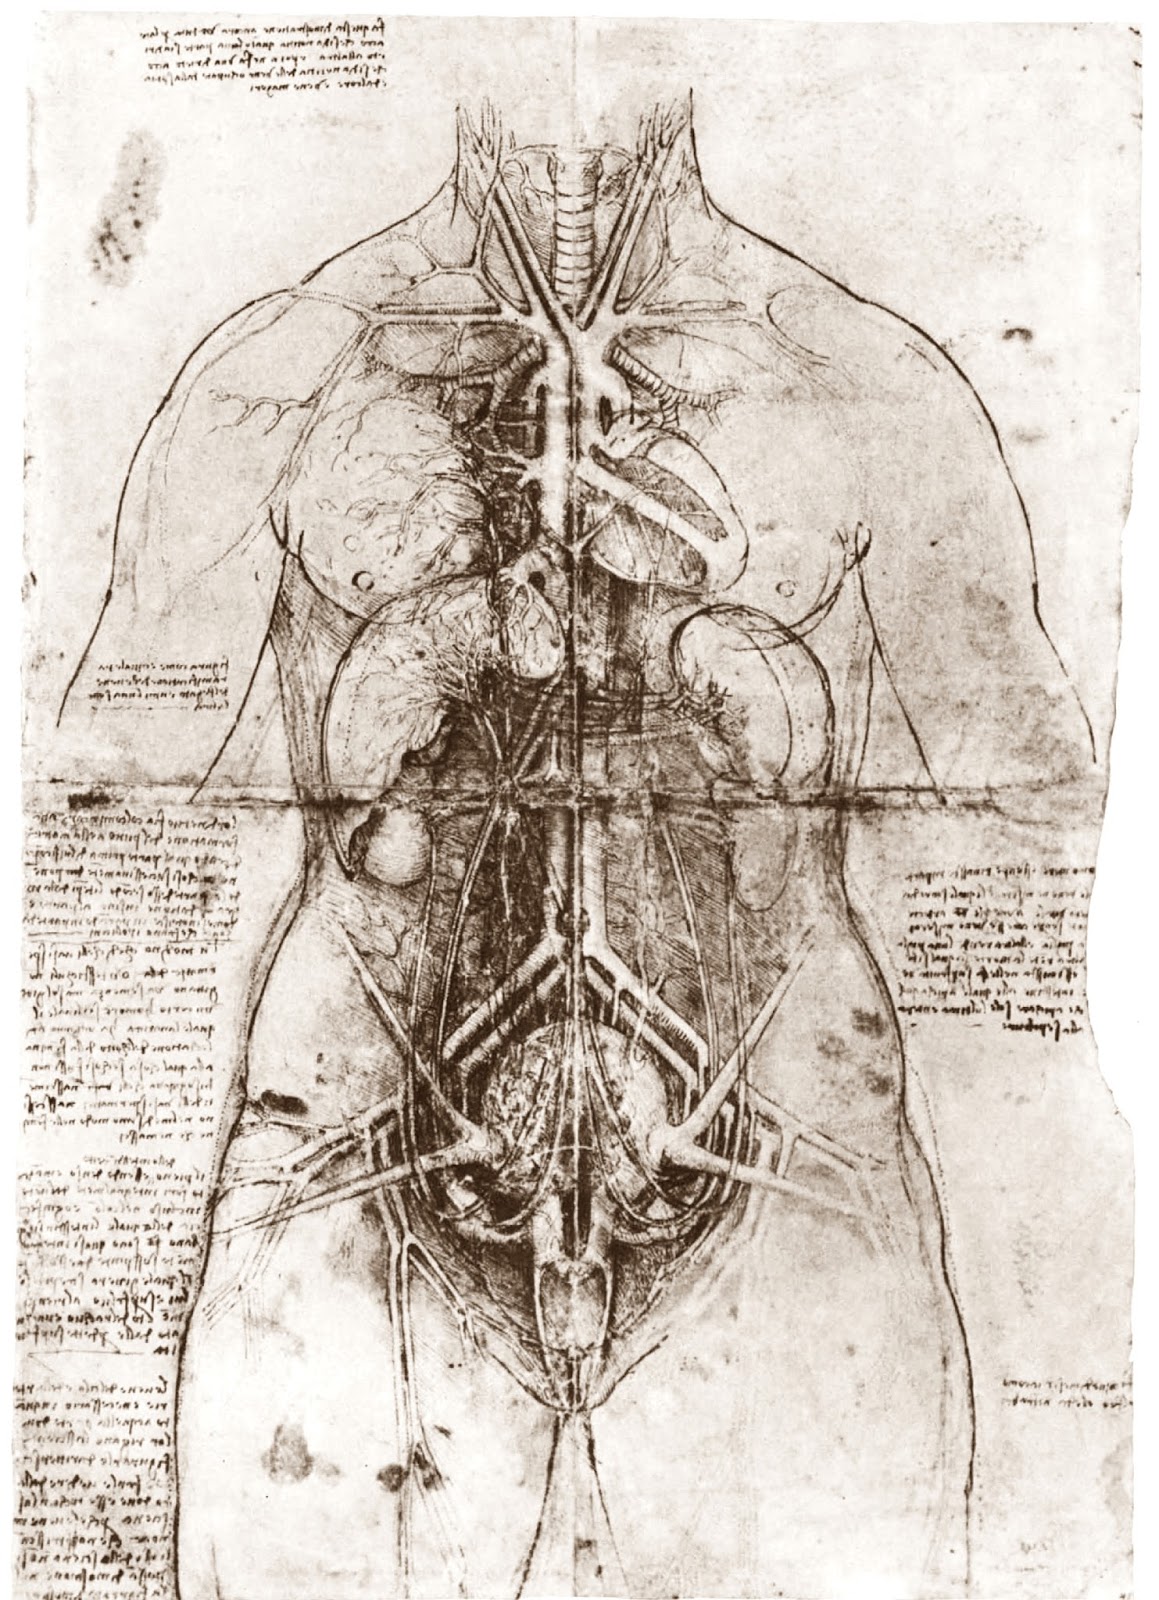 Leonardo+da+Vinci-1452-1519 (744).jpg